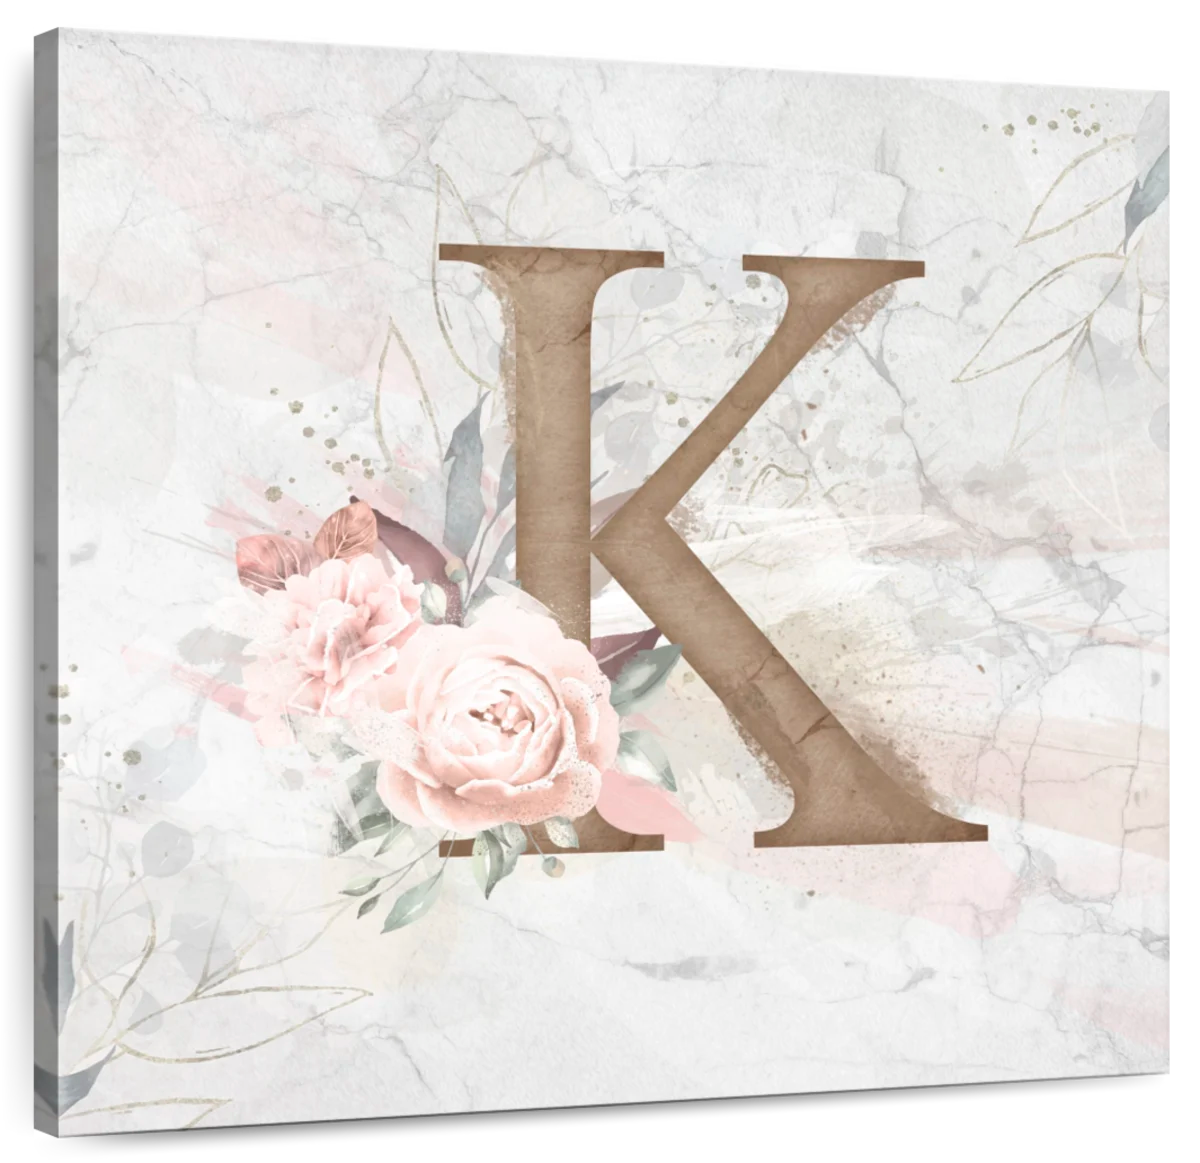 k letter in rose